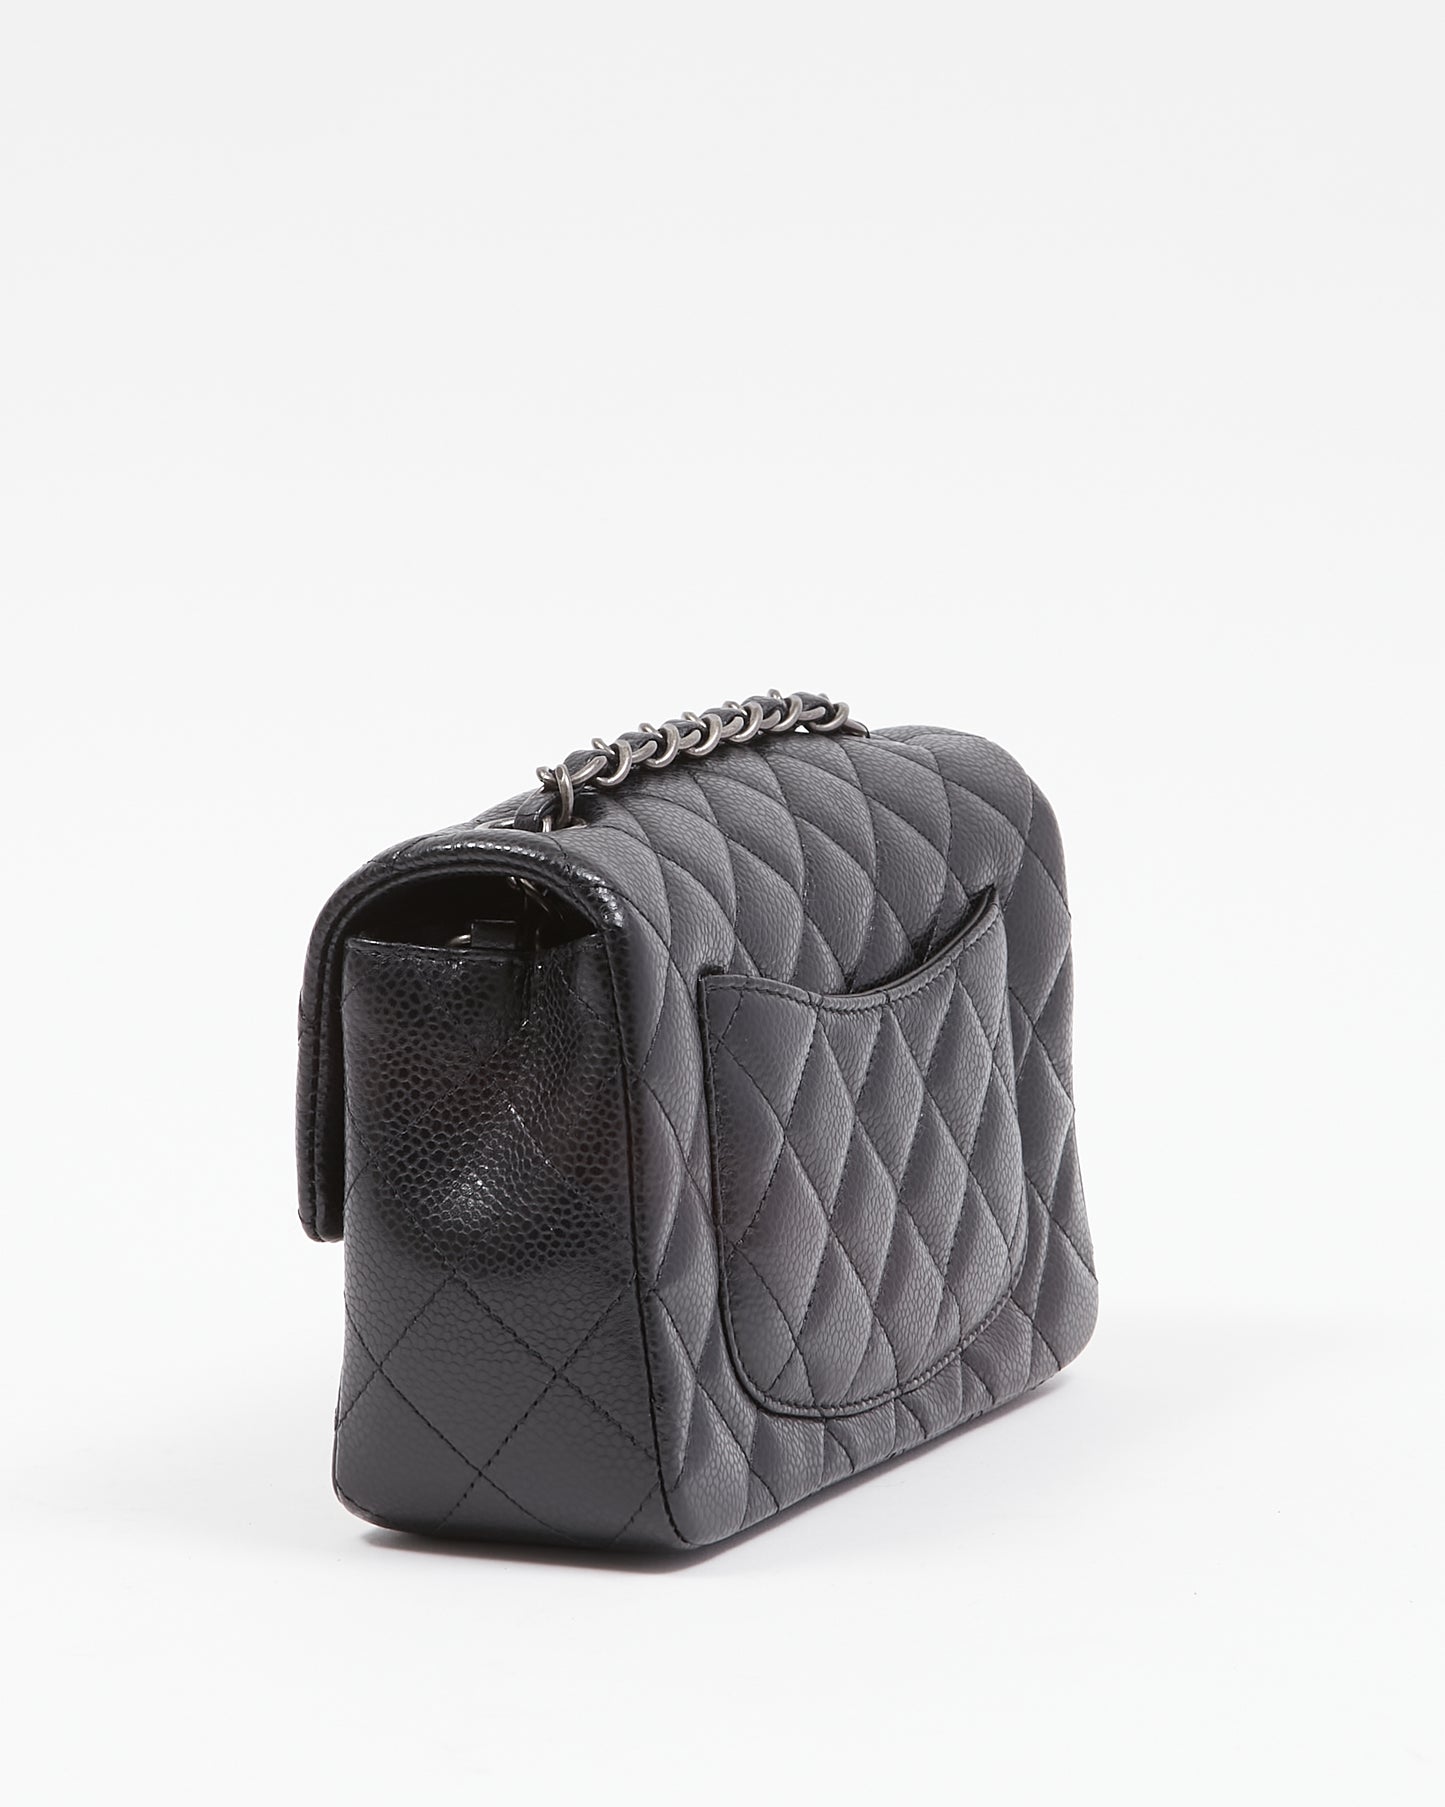 Chanel Black Caviar Mini Rectangular Flap Bag